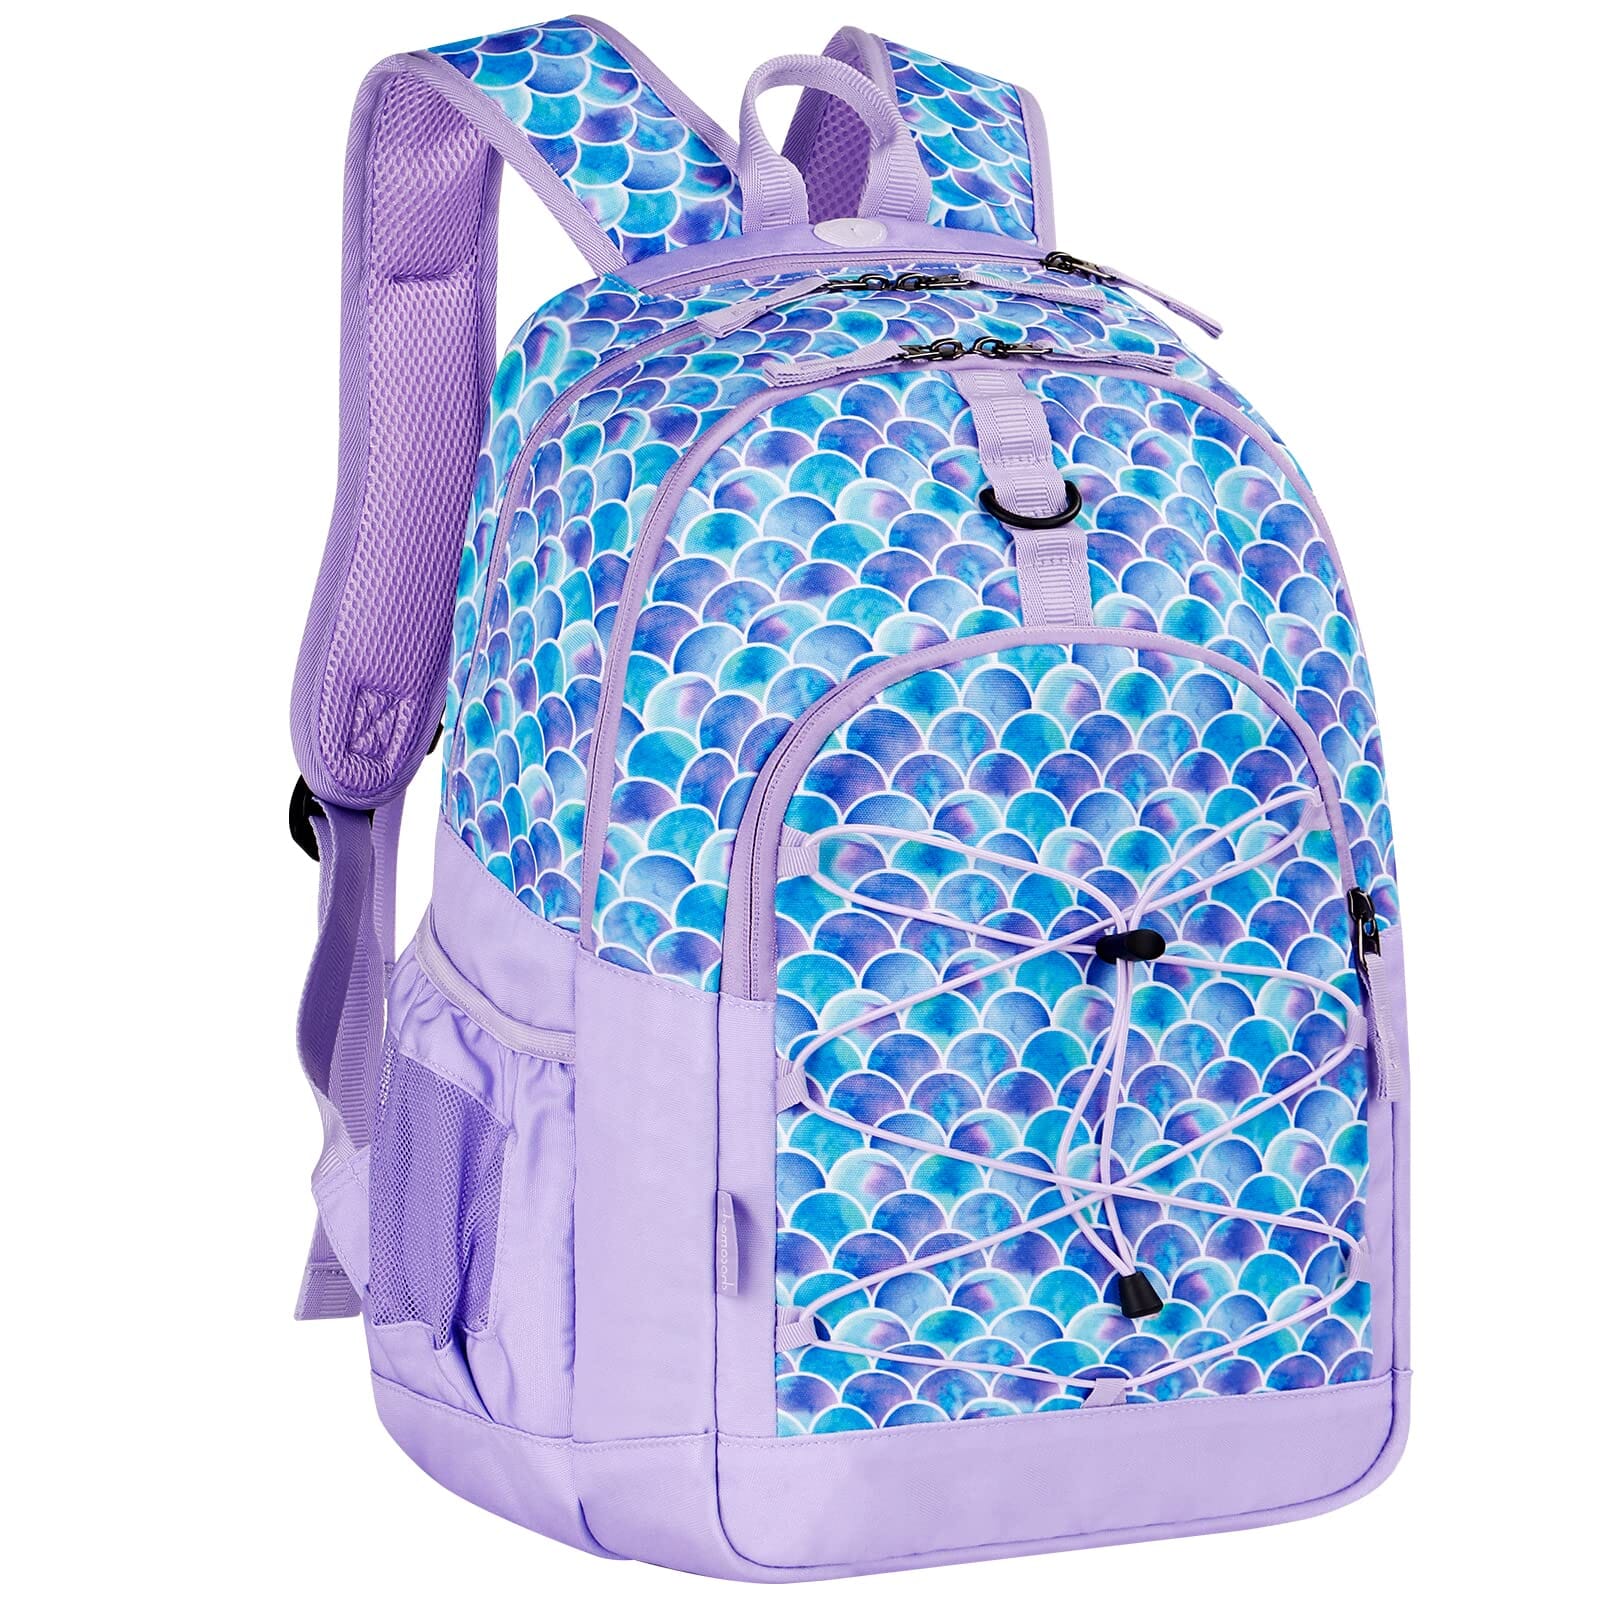 Choco Mocha Mermaid Backpack for Teen Girls, Travel School Backpack for Kids Middle School Large Bookbag 18 Inch, Purple chocomochakids 